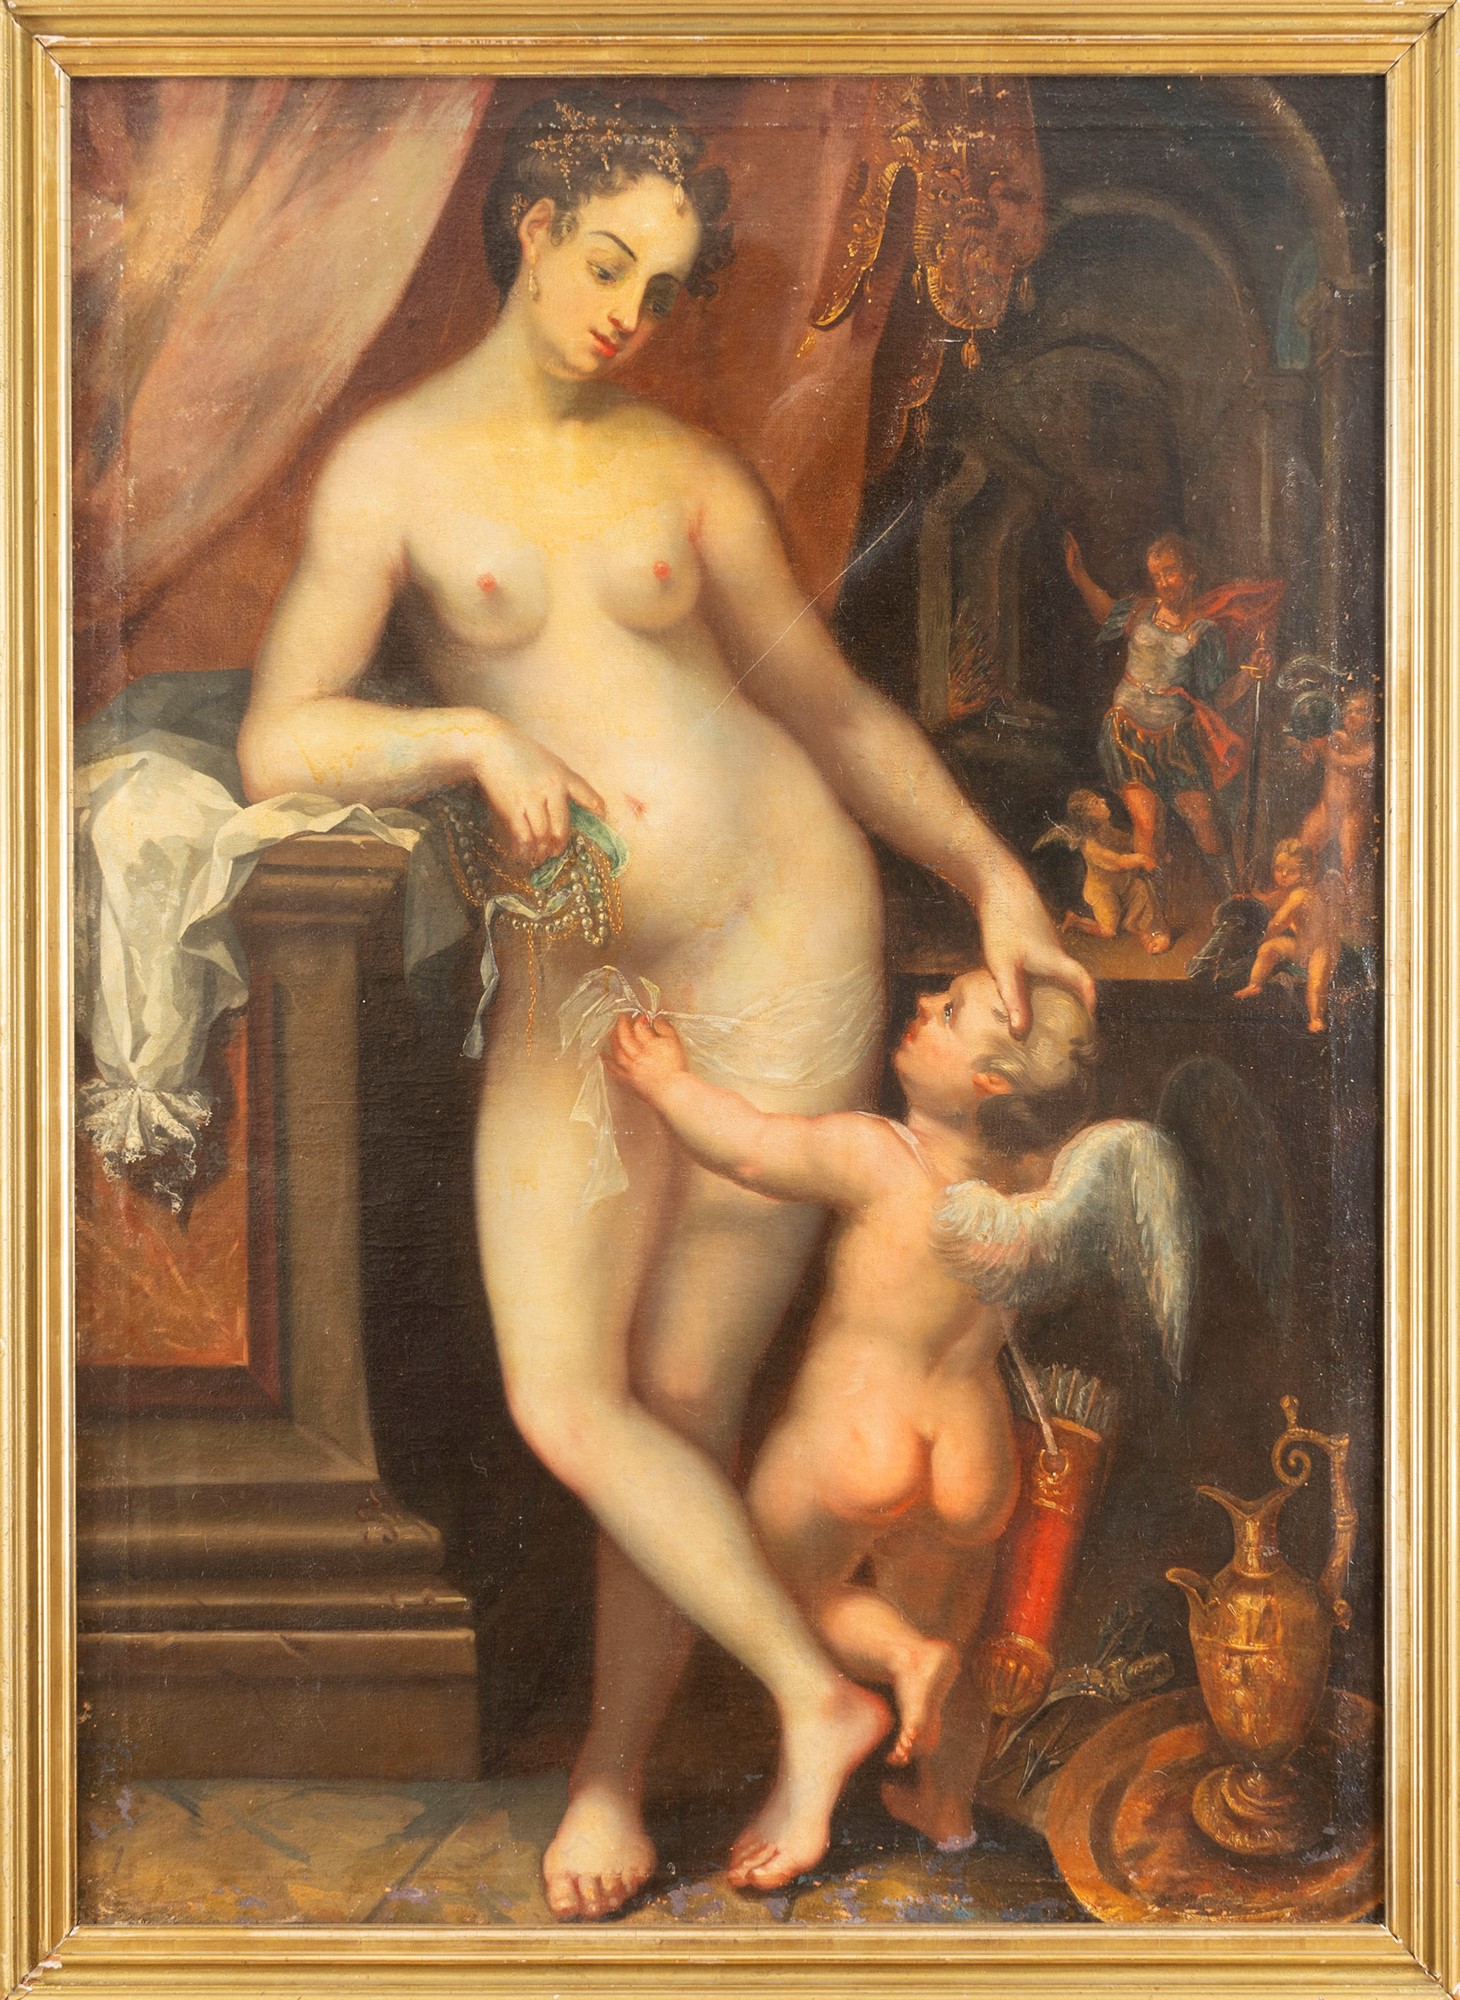 Flemish School, late sixteenth century - early seventeenth century - Venus, Mars and Cupid - Image 2 of 3